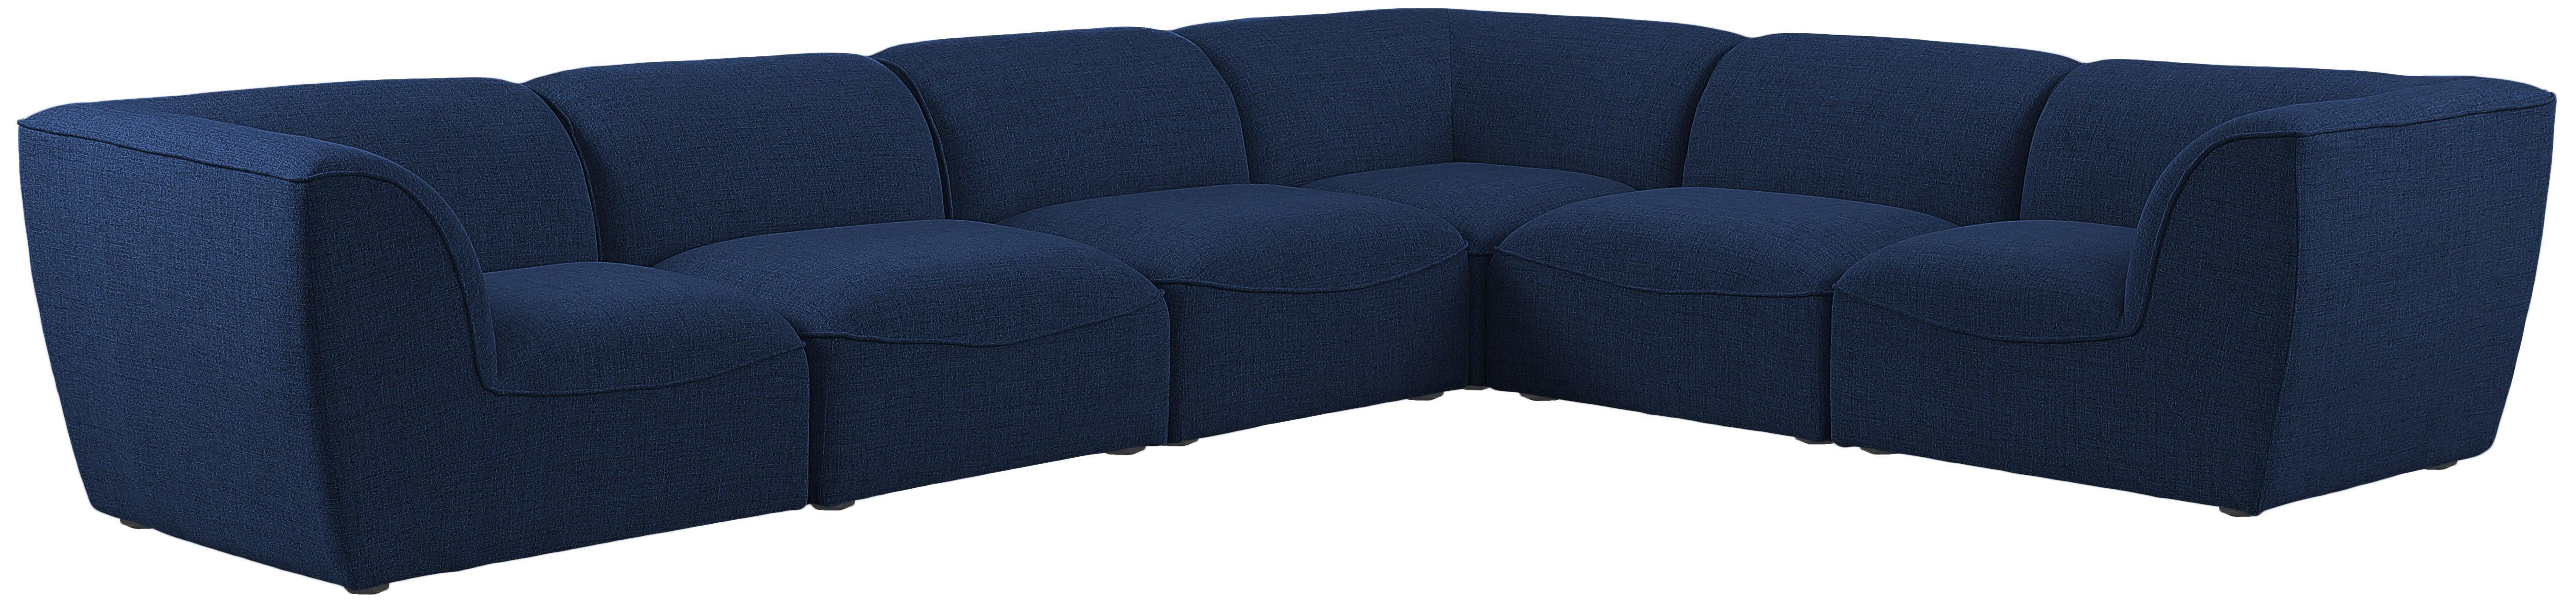 Meridian Furniture - Miramar - Modular Sectional 6 Piece - Navy - Fabric - 5th Avenue Furniture